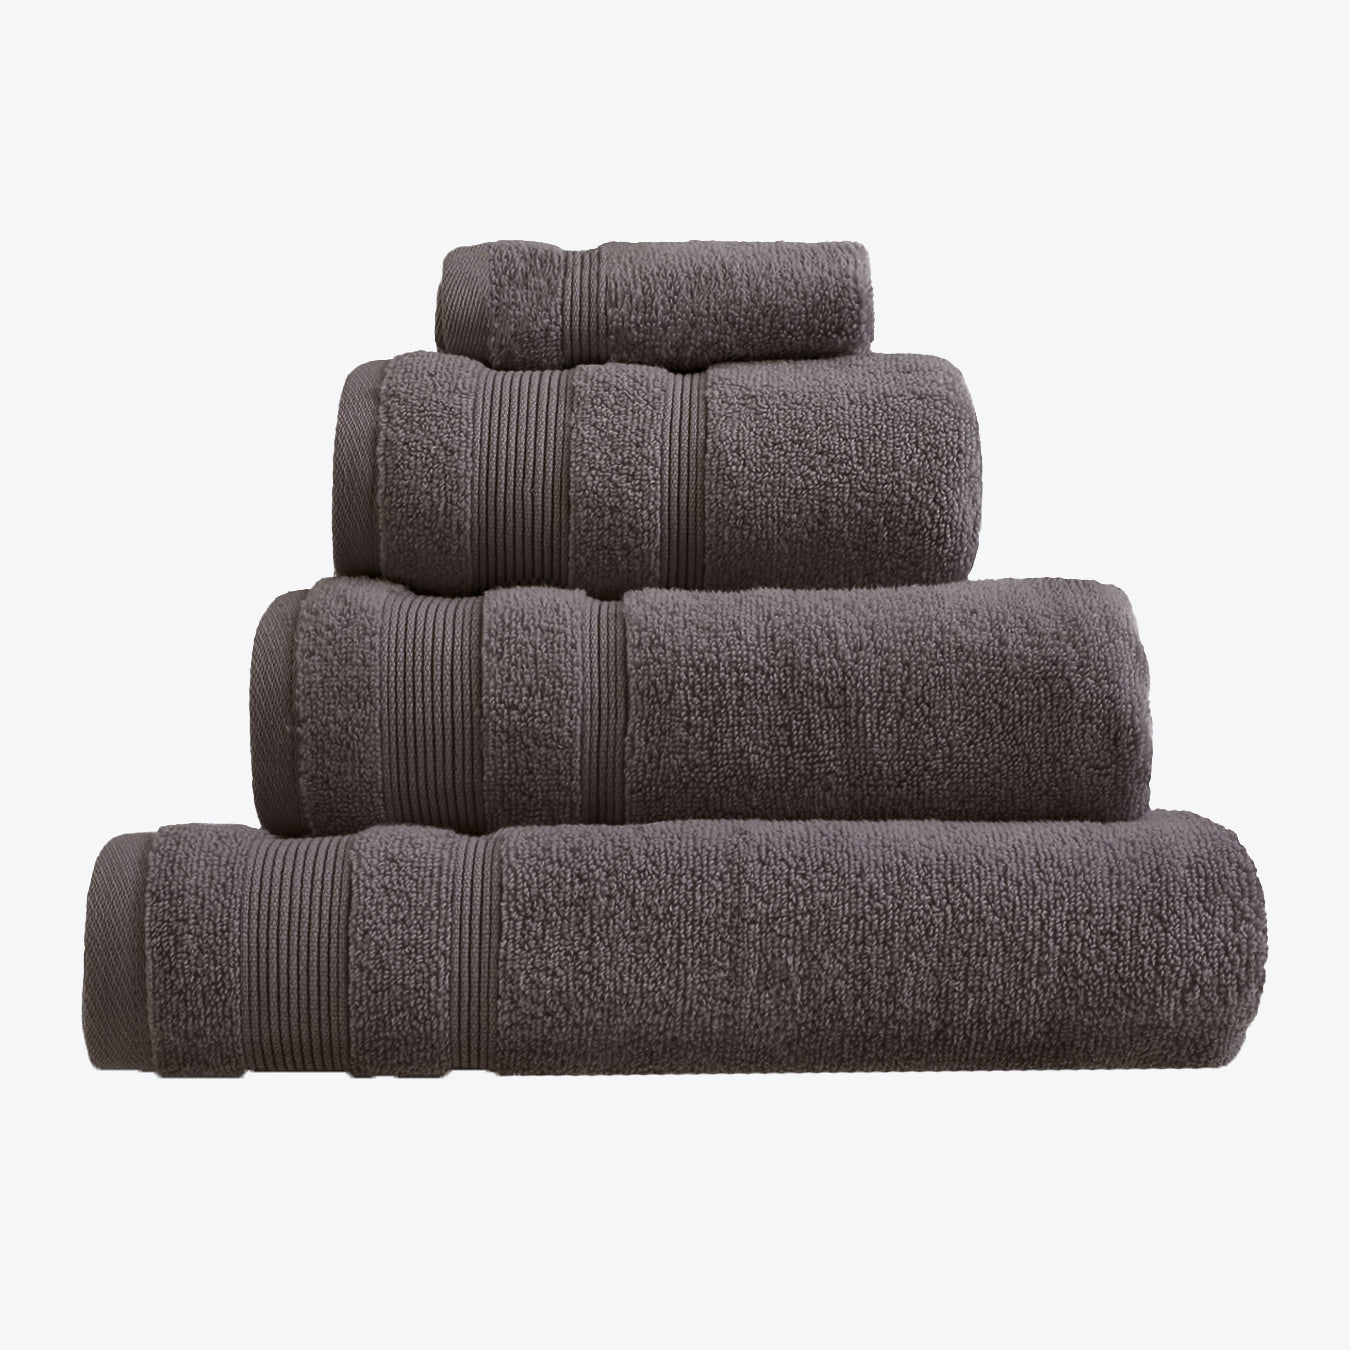 Charcoal Grey Egyptian Cotton Towel Bale Set - Premium Zero Twist Bathroom Towels (Hand Towel, Bath Towel, Bath Sheet, face Cloths).